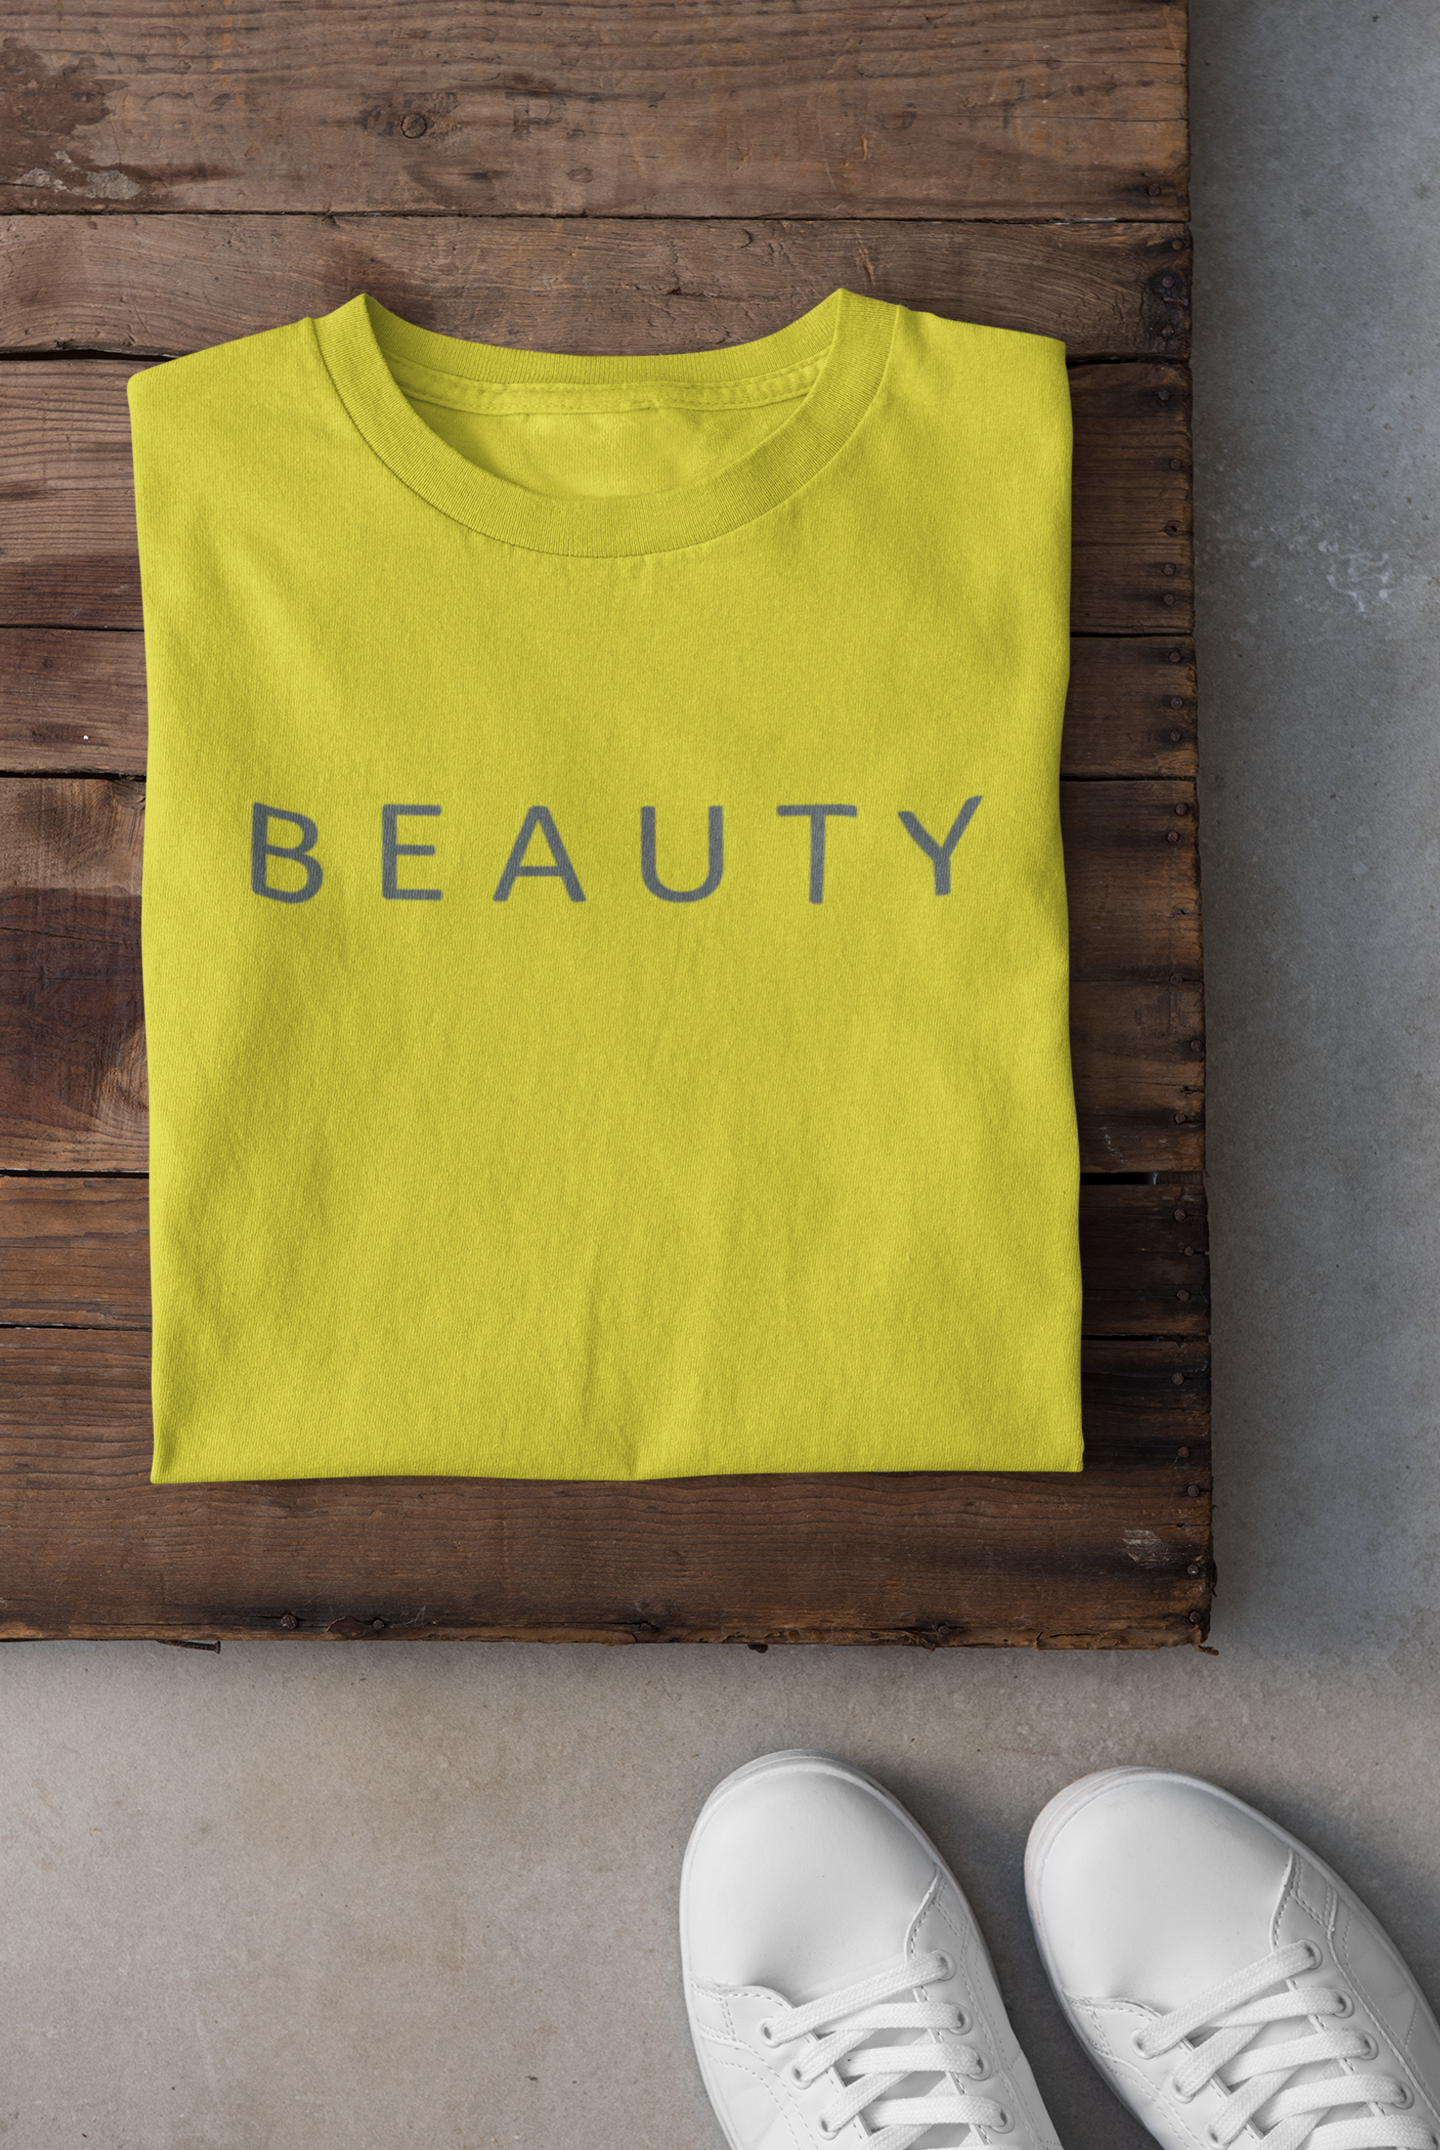 Beauty Victoria Beckham Celebrity T-shirt- FunkyTeesClub